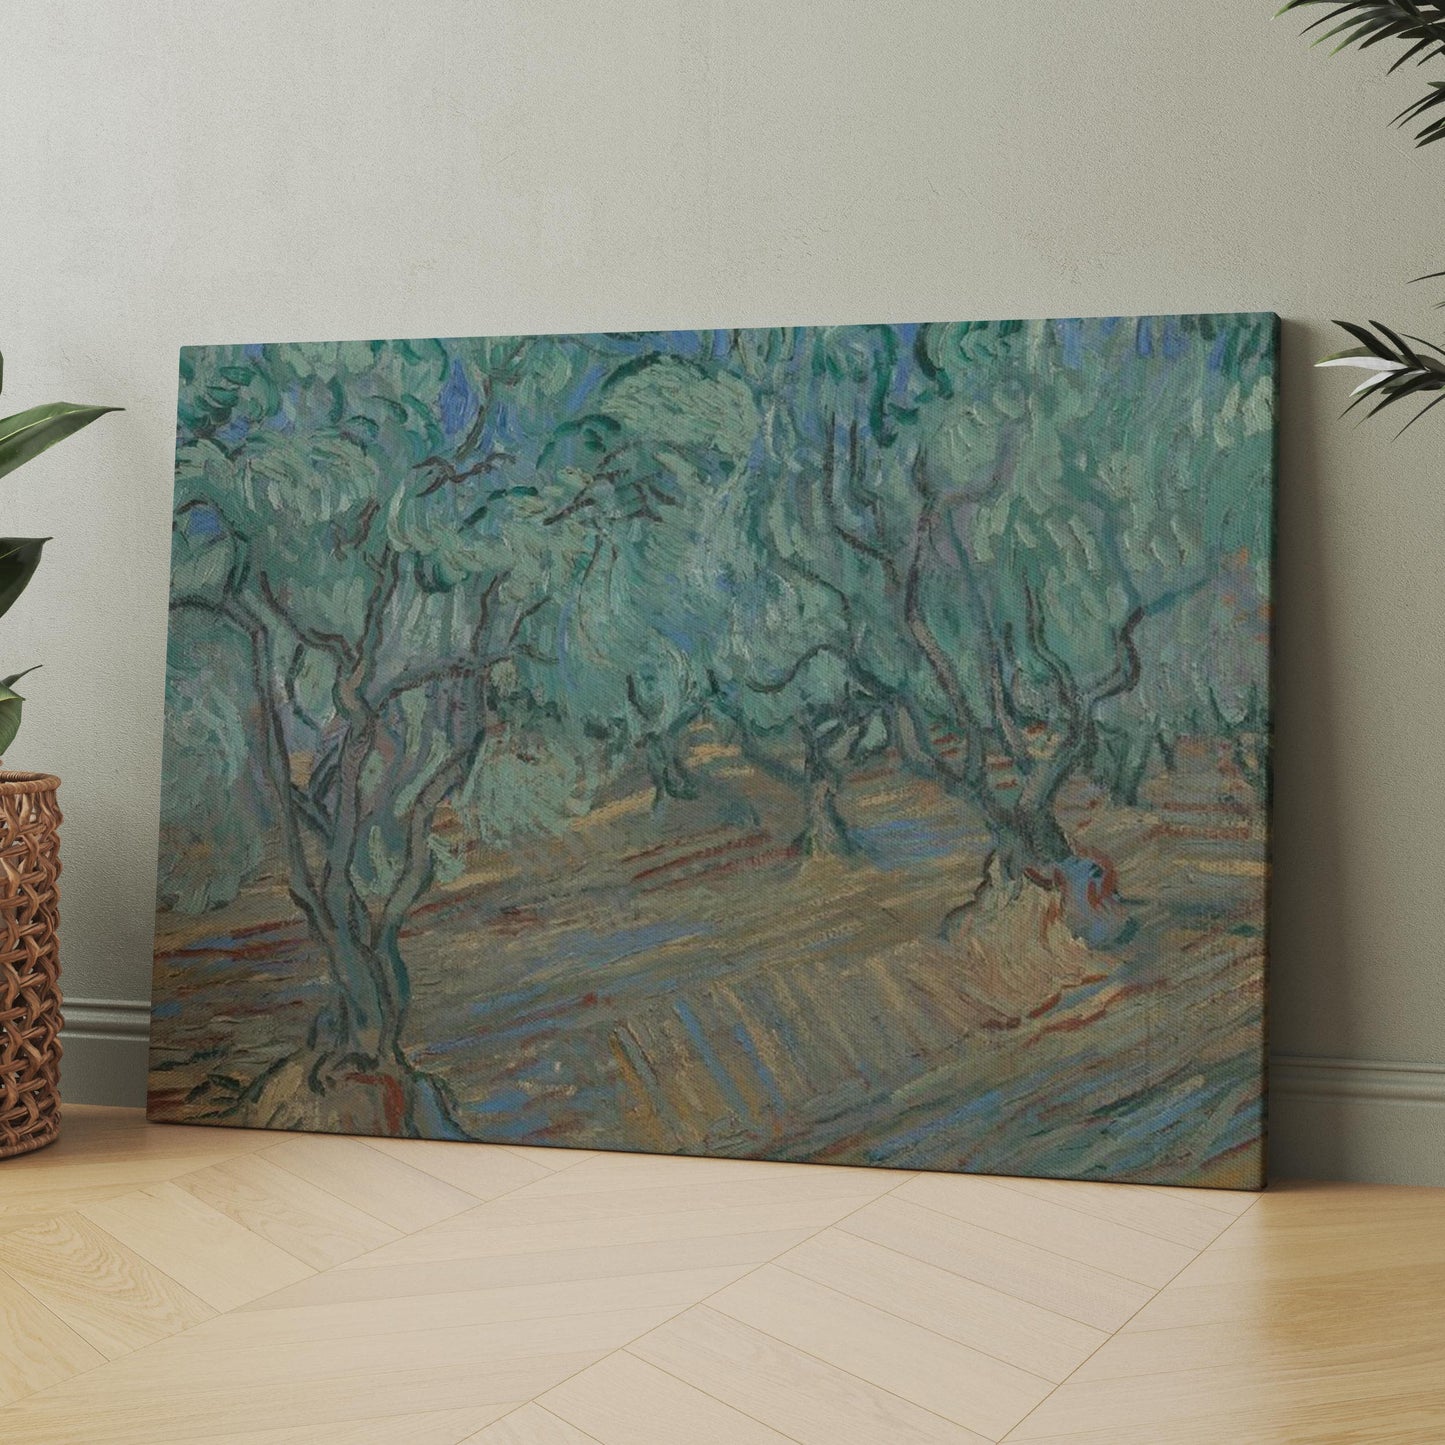 Olive Grove (1889) by Van Gogh